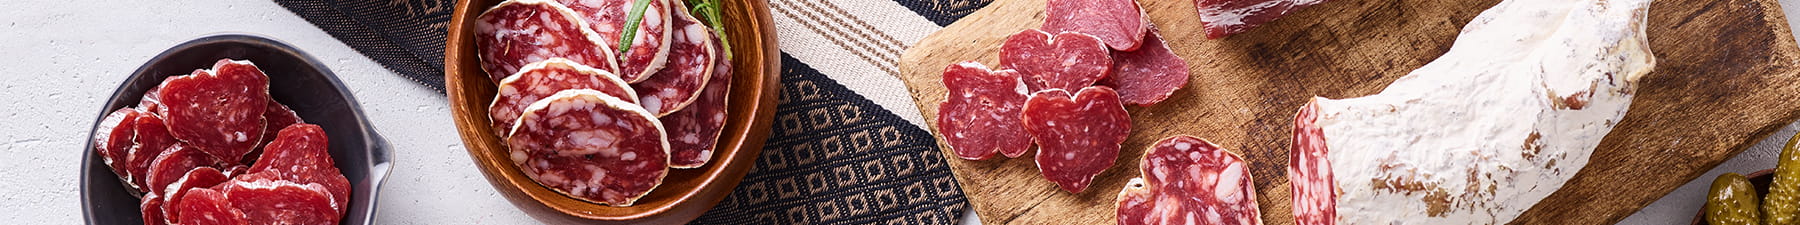 Sliced salami on wooden board